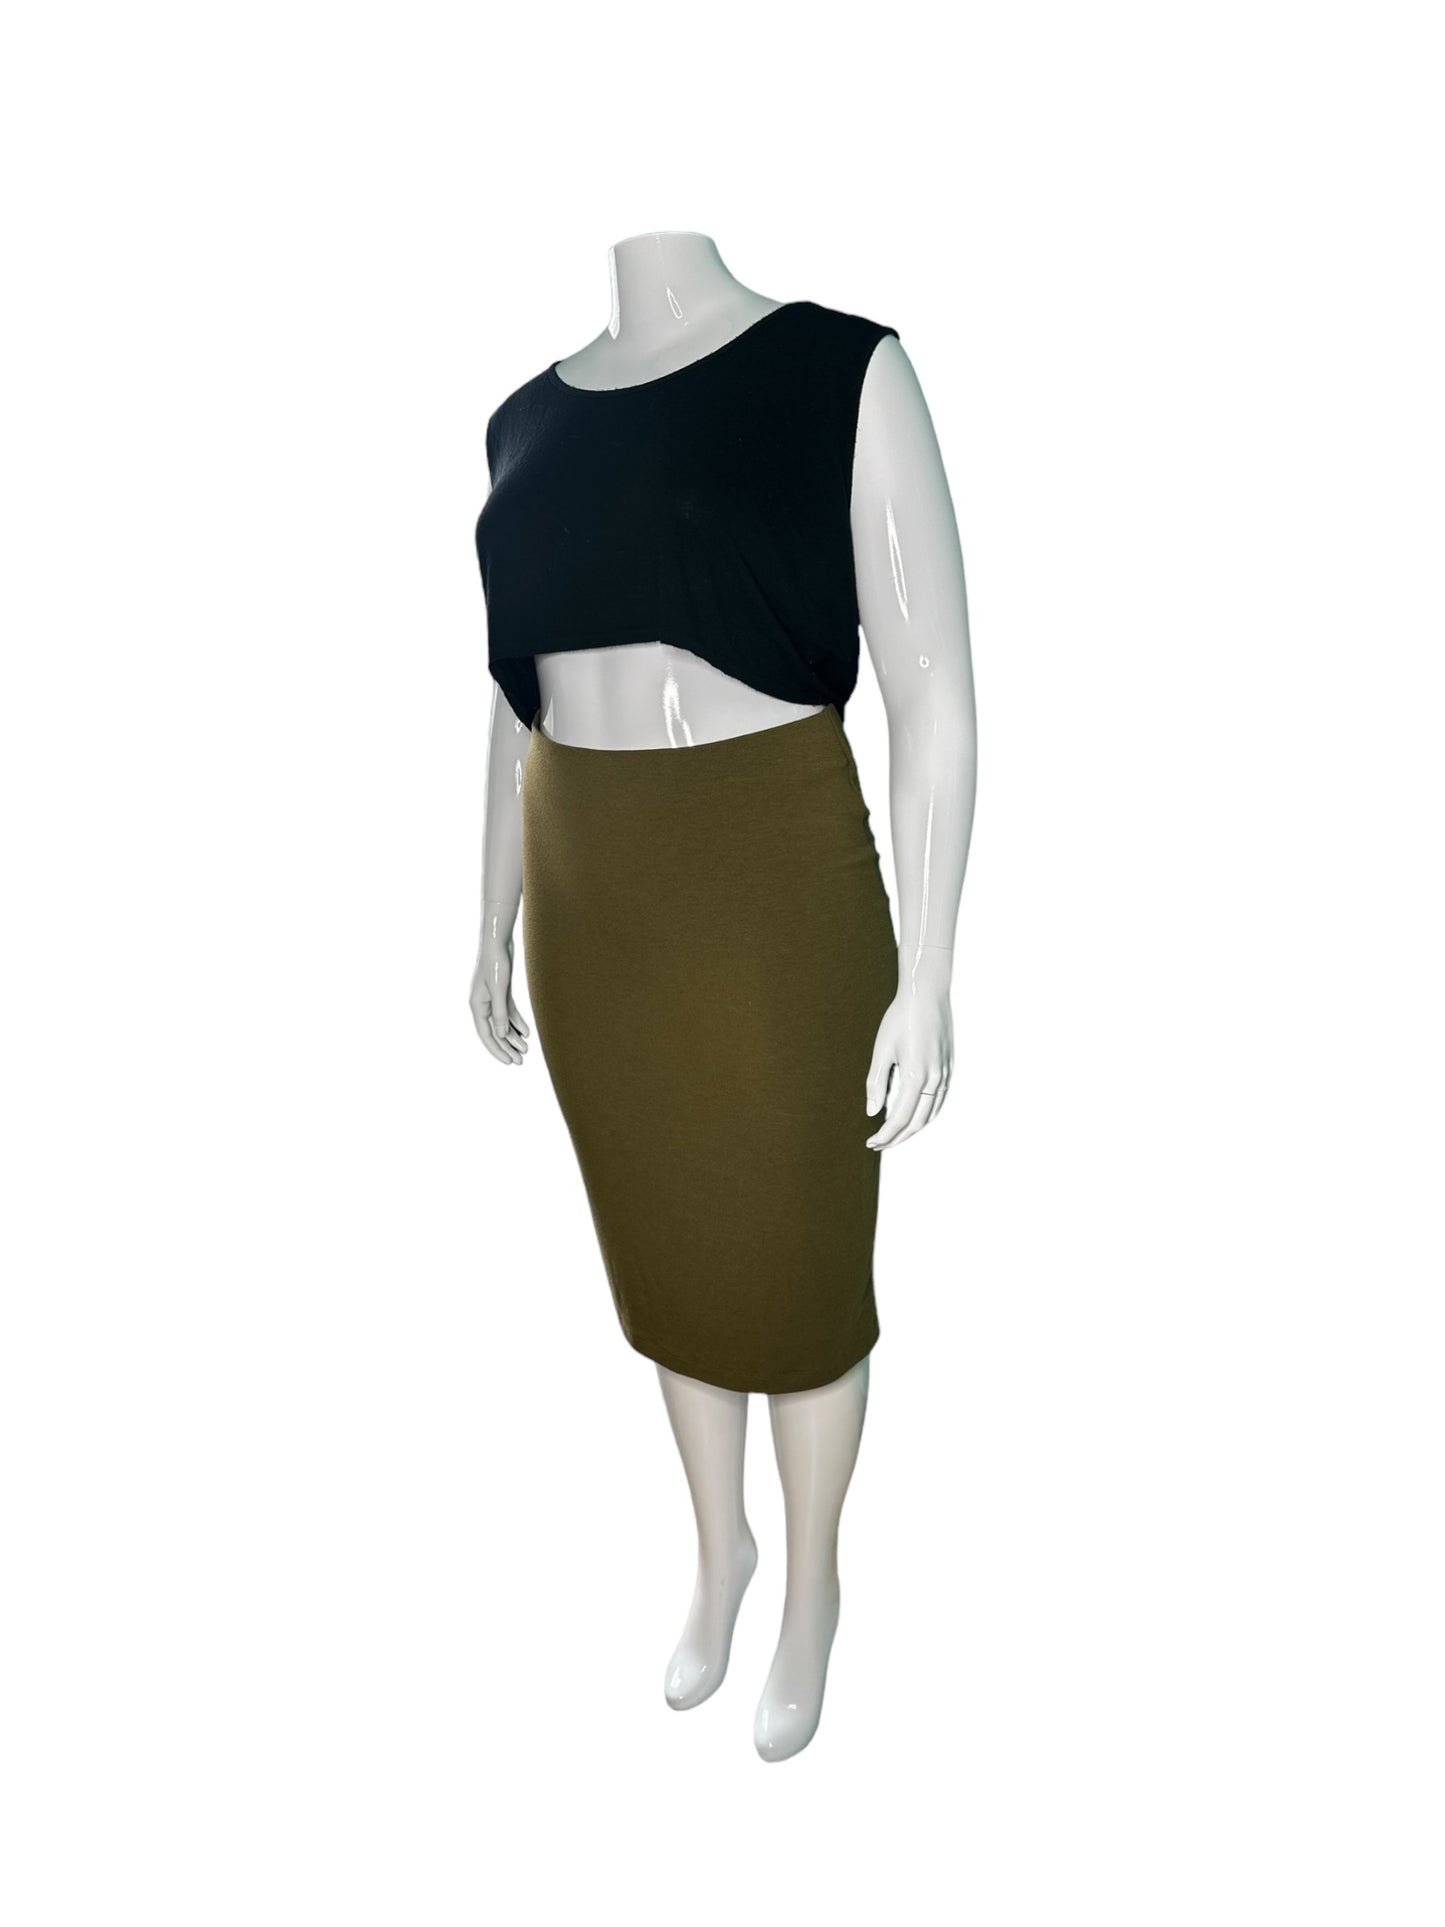 Olive Geeen Pencil Skirt (1X)